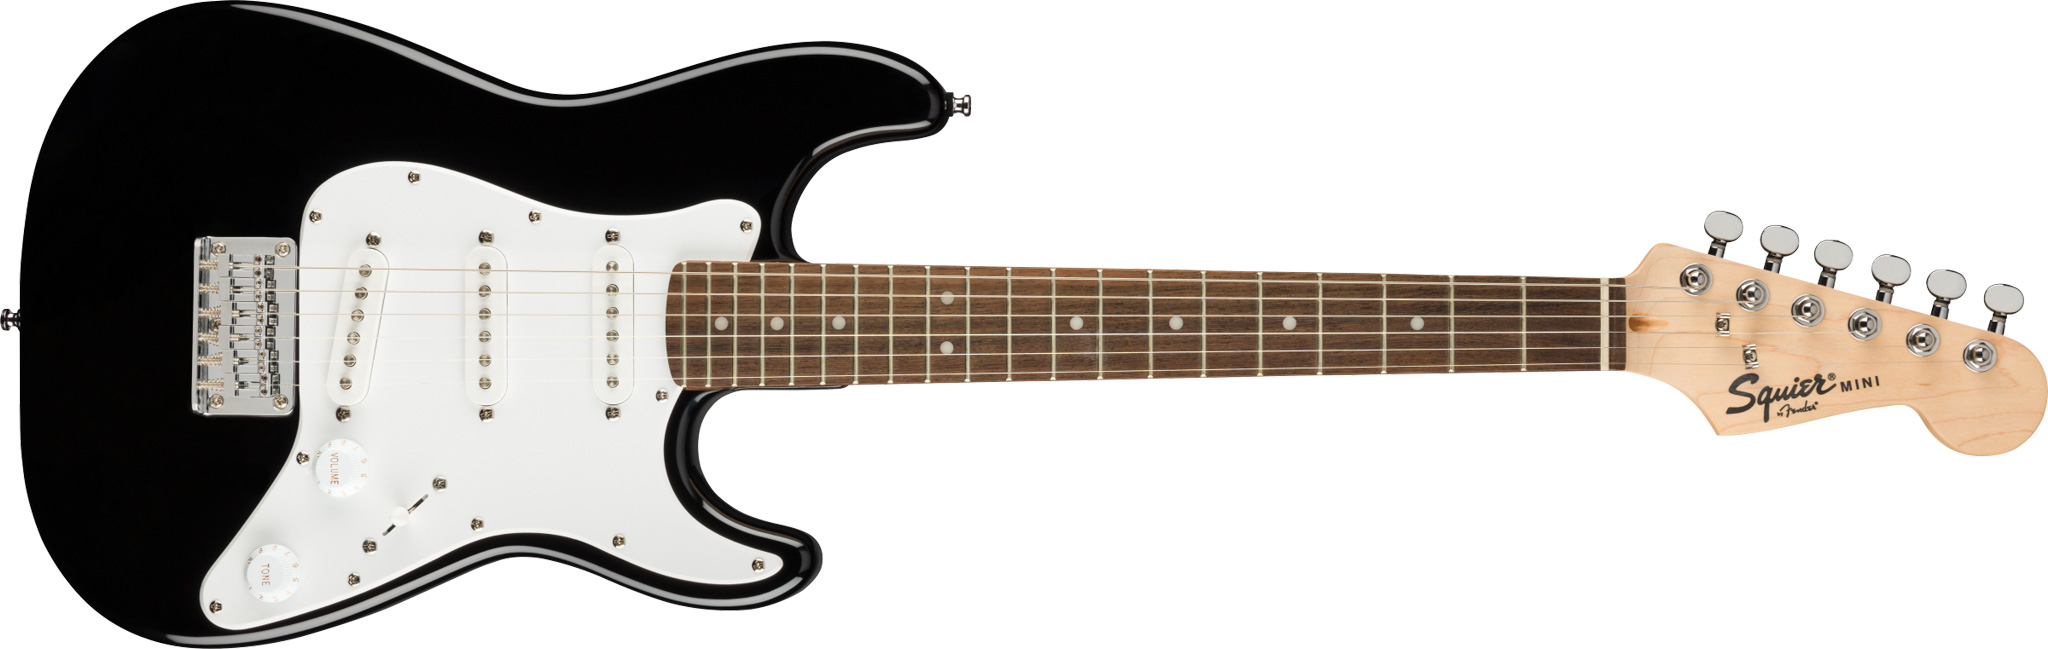 Se Fender Squier Mini Stratocaster El-guitar (Sort) hos Drum City